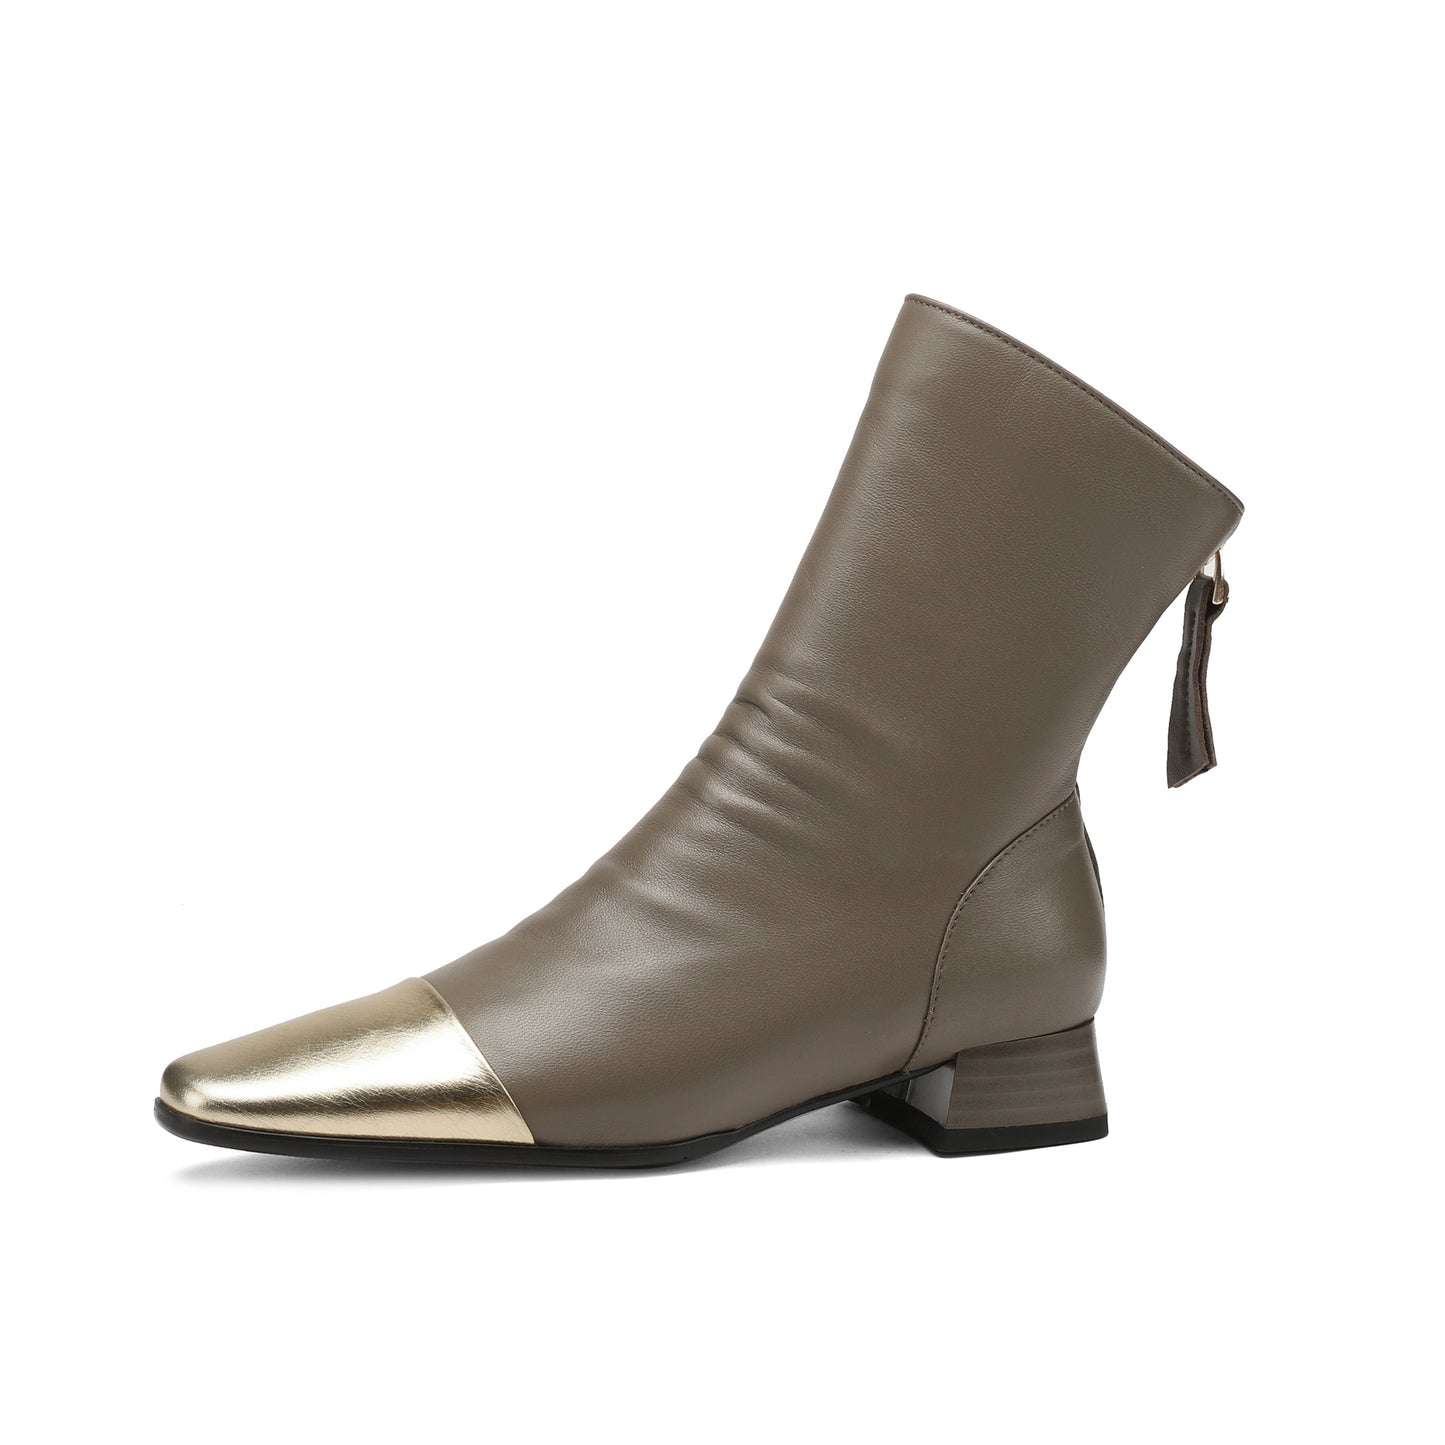 TinaCus Women's Cap-Toe Genuine Leather Handmade Low Heel Back Zip Up Ankle Boots